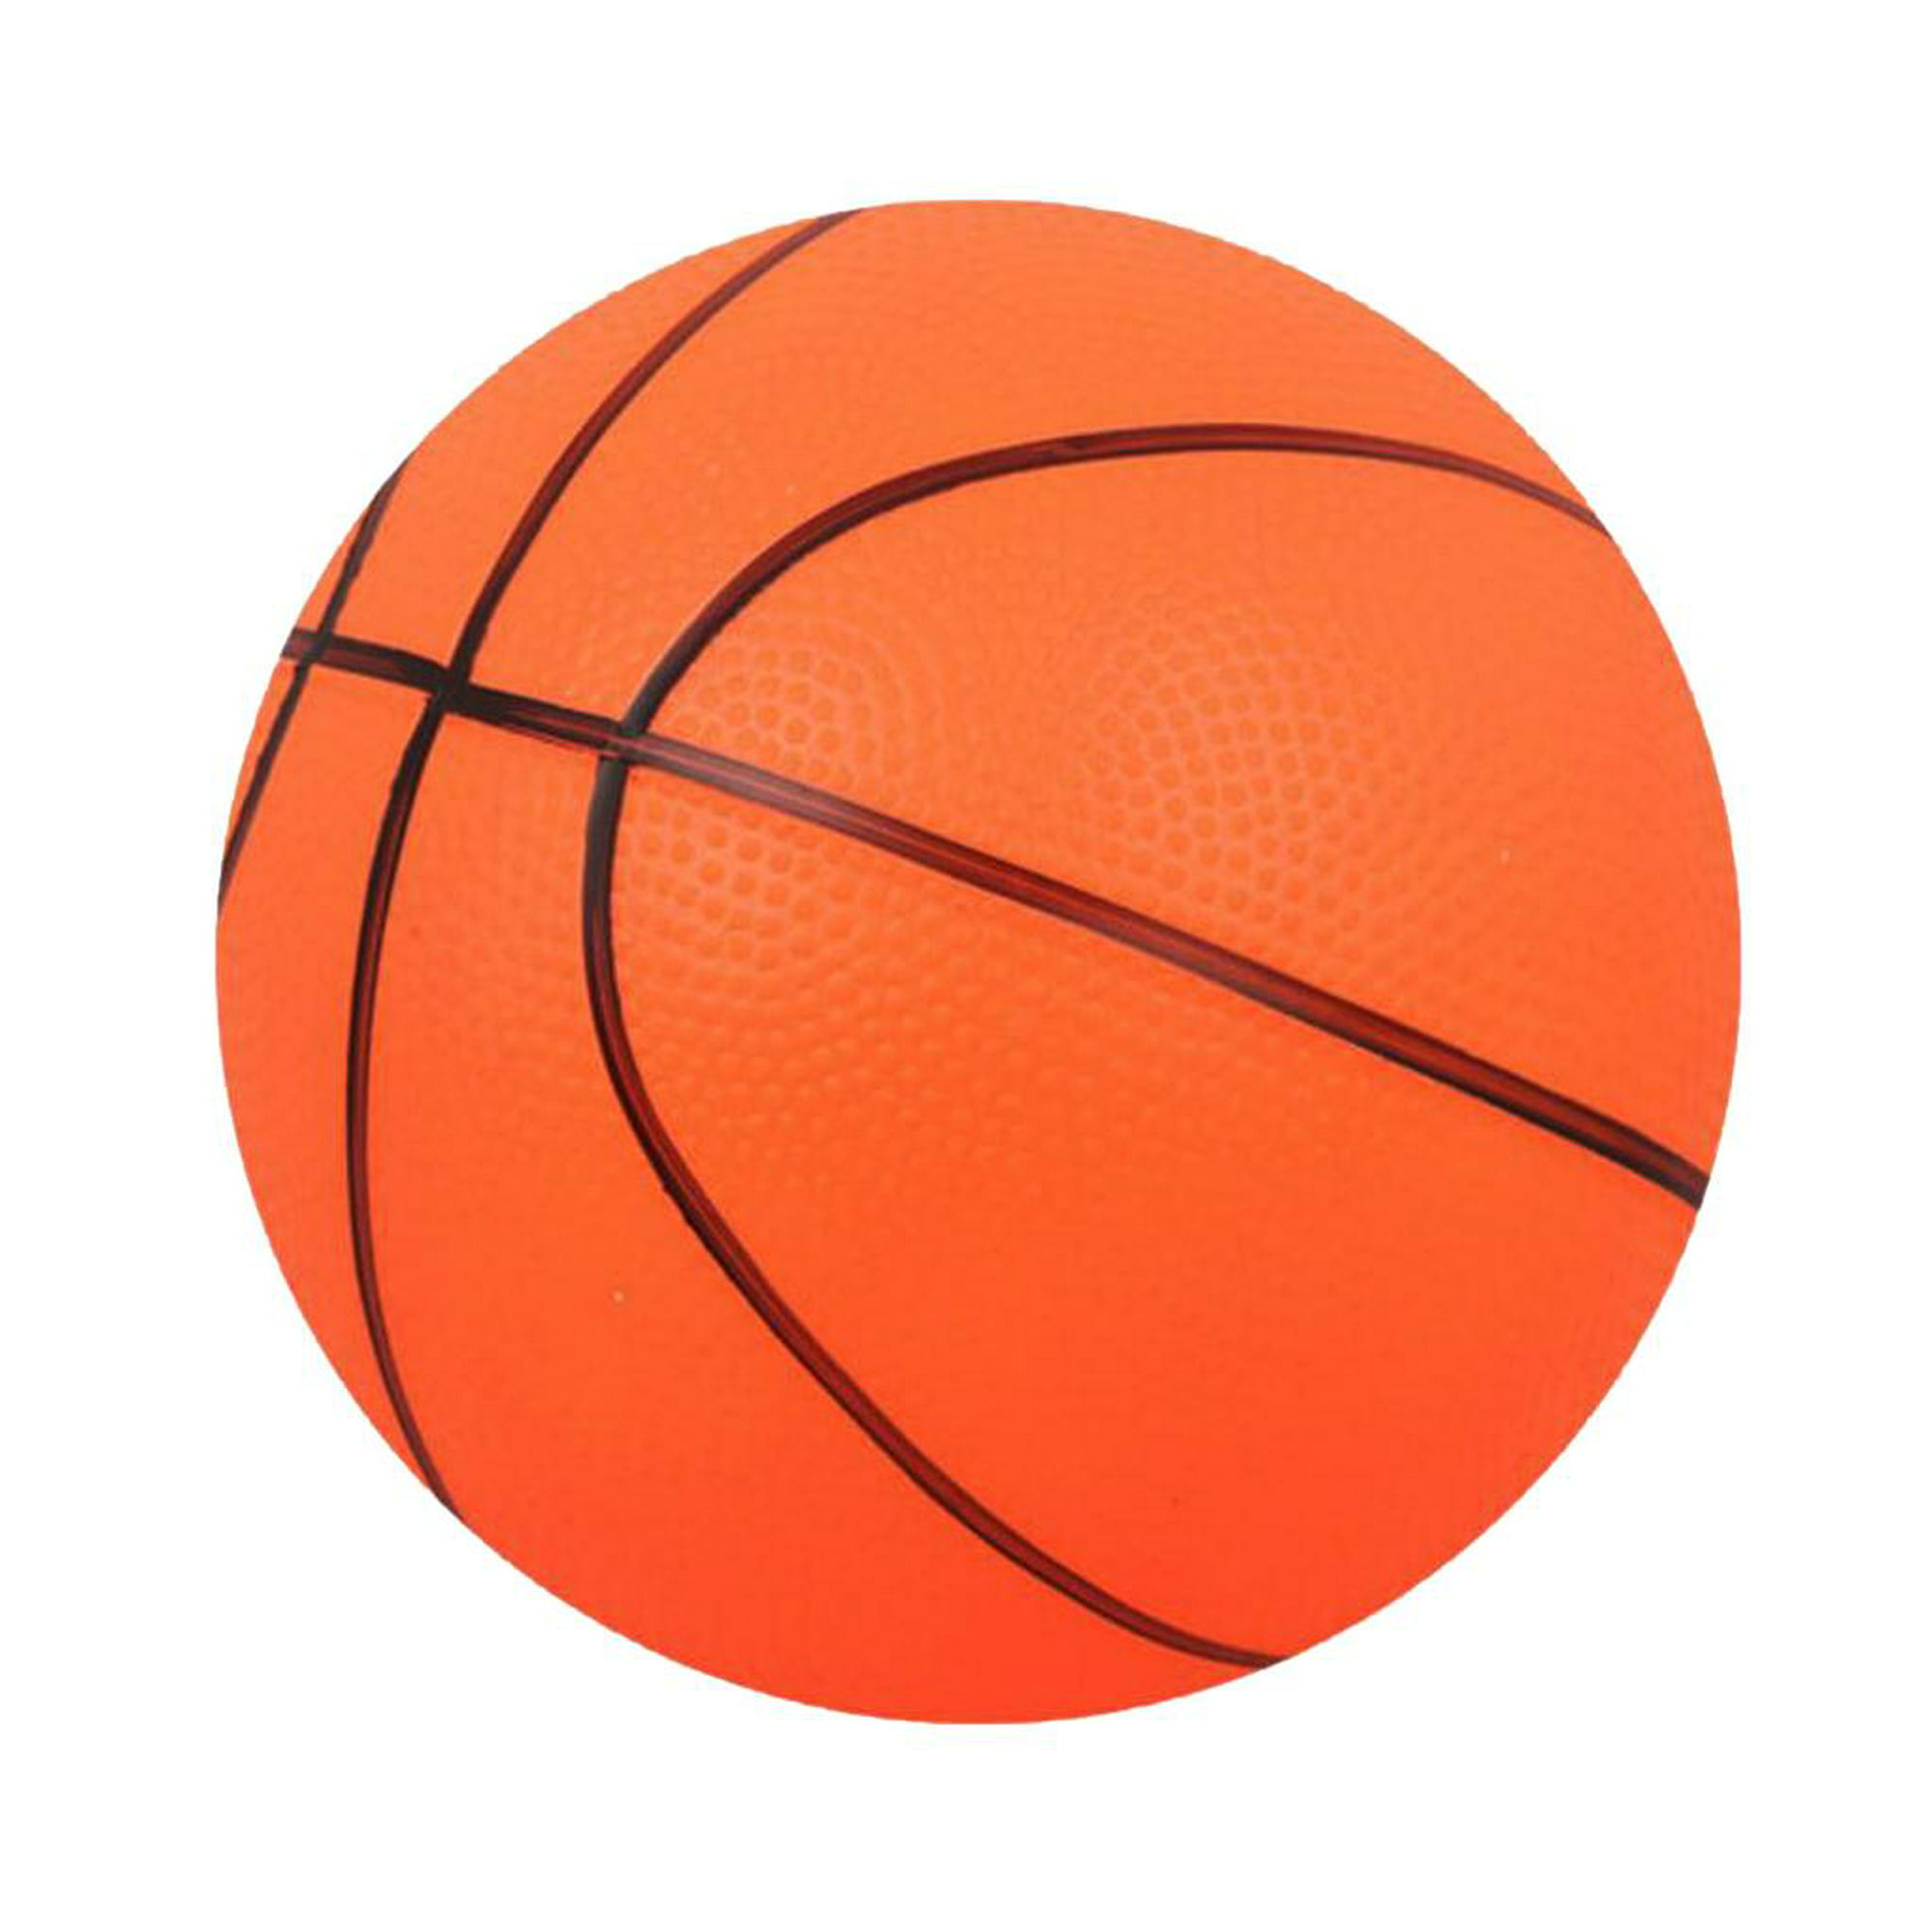  Yosoo Health Gear Mini pelota deportiva, baloncesto de plástico  suave, pelota de baloncesto inflable para exteriores e interiores :  Deportes y Actividades al Aire Libre